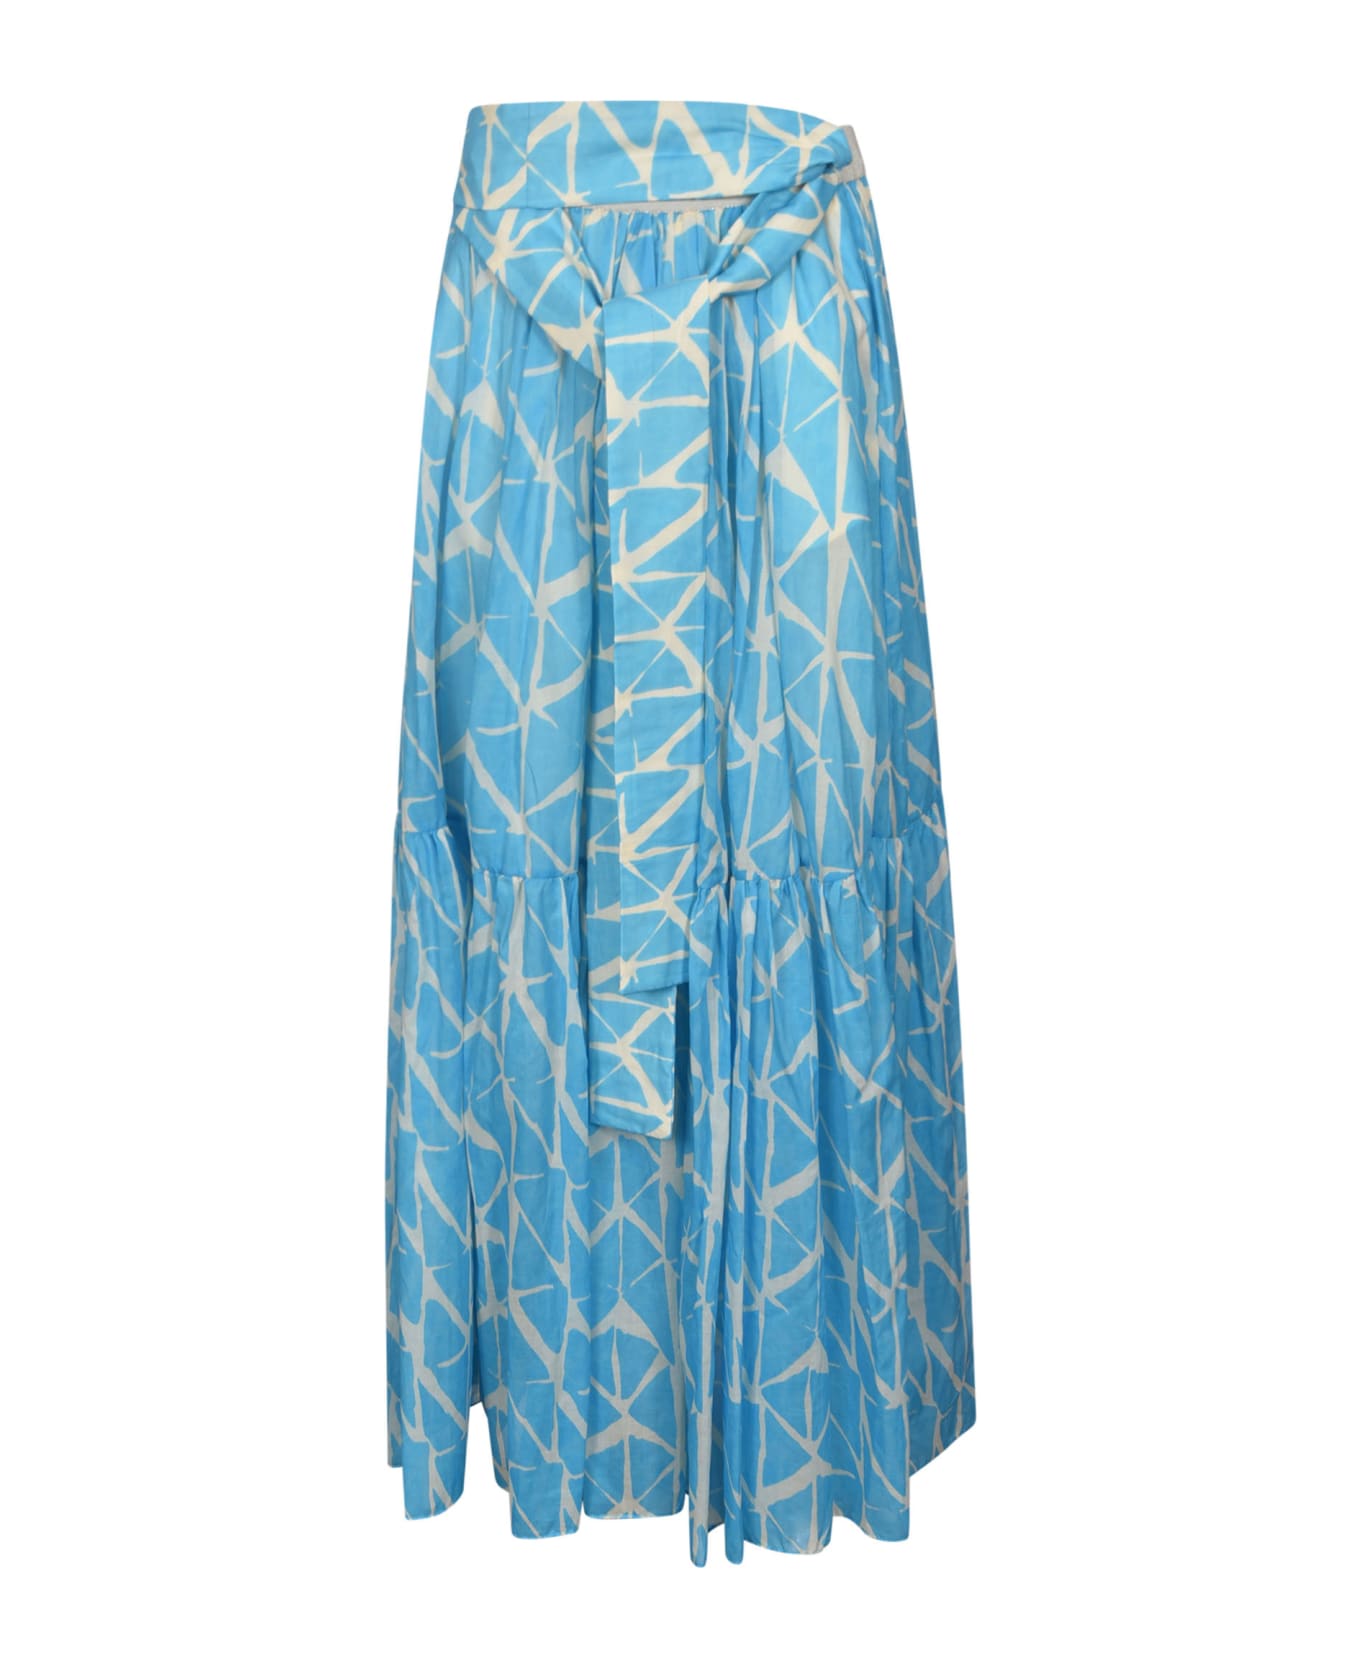 Lorena Antoniazzi Tied Waist Printed Skirt - White/Turquoise スカート